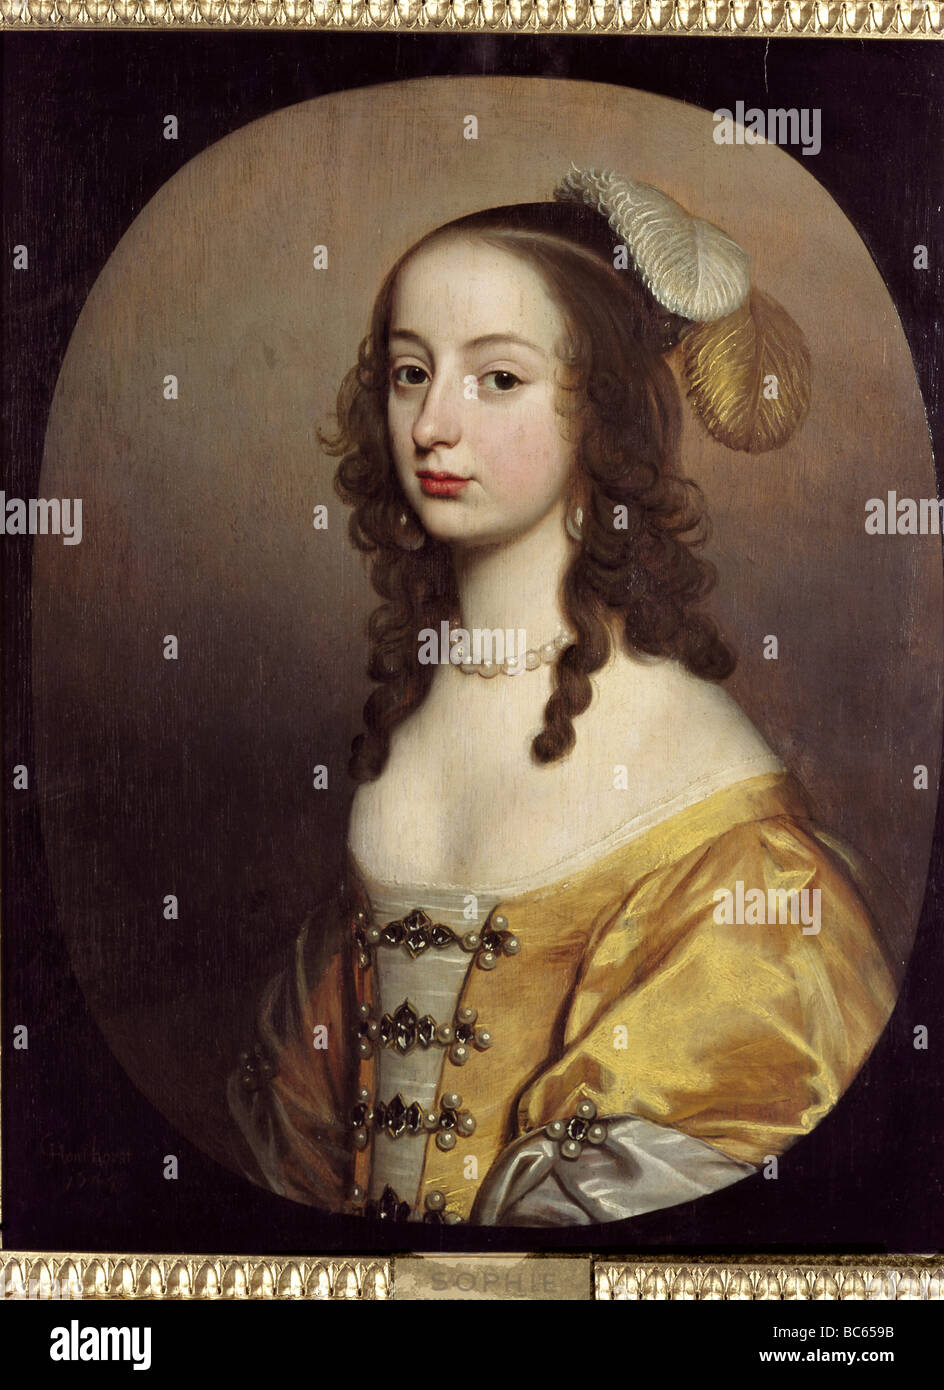 Sophia, 13.10.1630 - 8.4.1714, Electress consorte de Hannover 28.12.1692 - 23.1.1698, retrato, pintura, circa 1650, Copyright del artista no ha de ser borrado Foto de stock